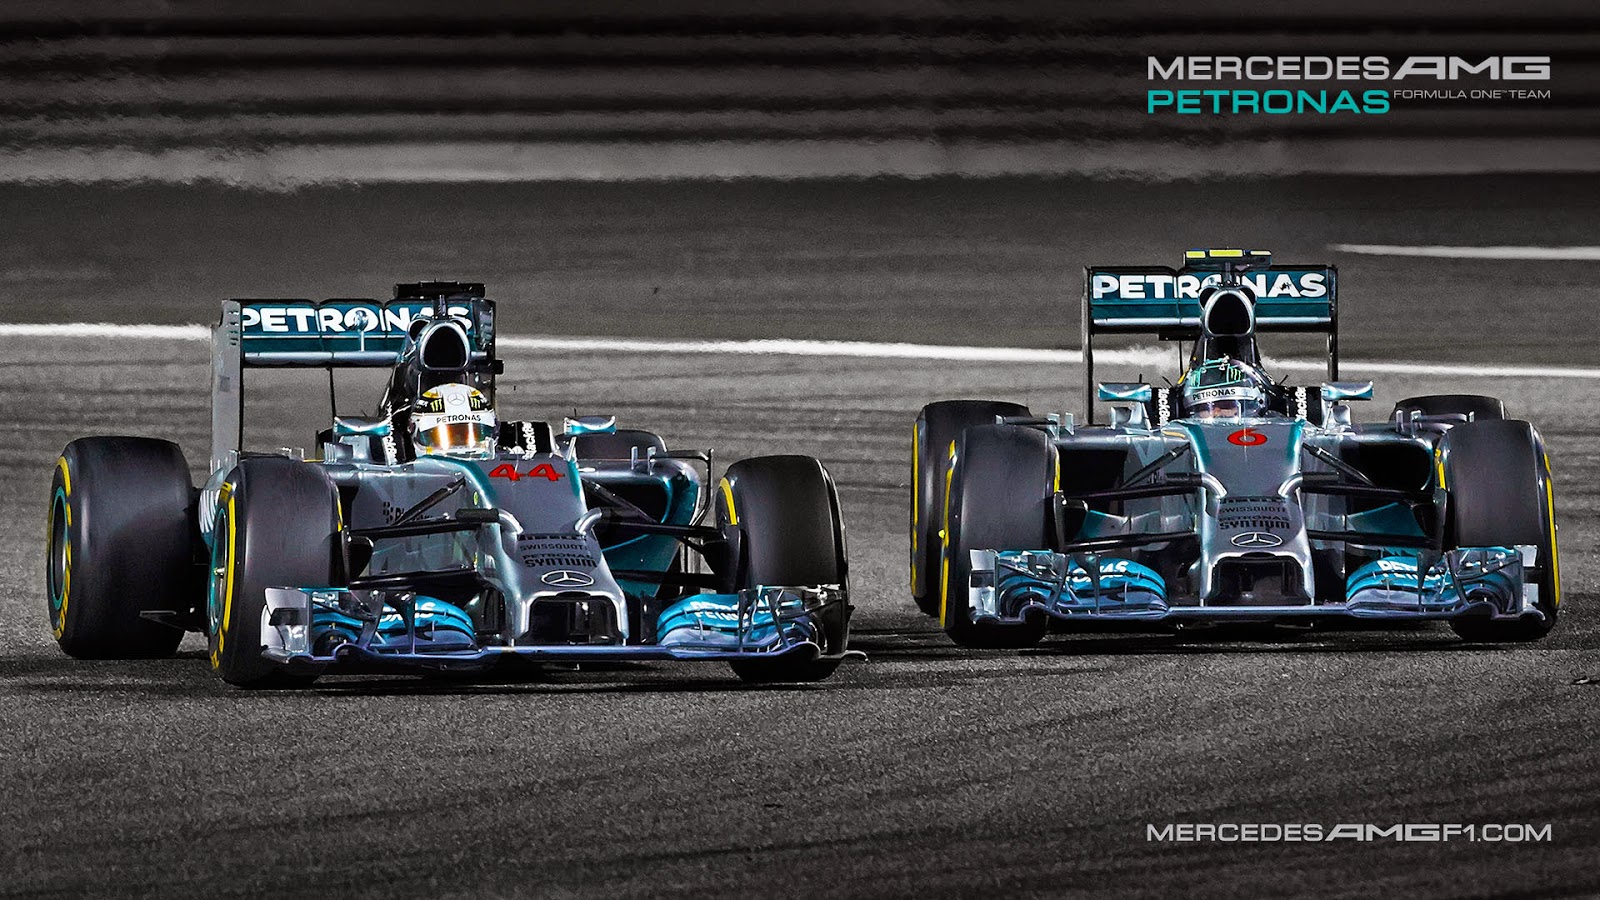 Tag F1 Graphic Malaysia Mercedes Petronas Sukan Wallpaper